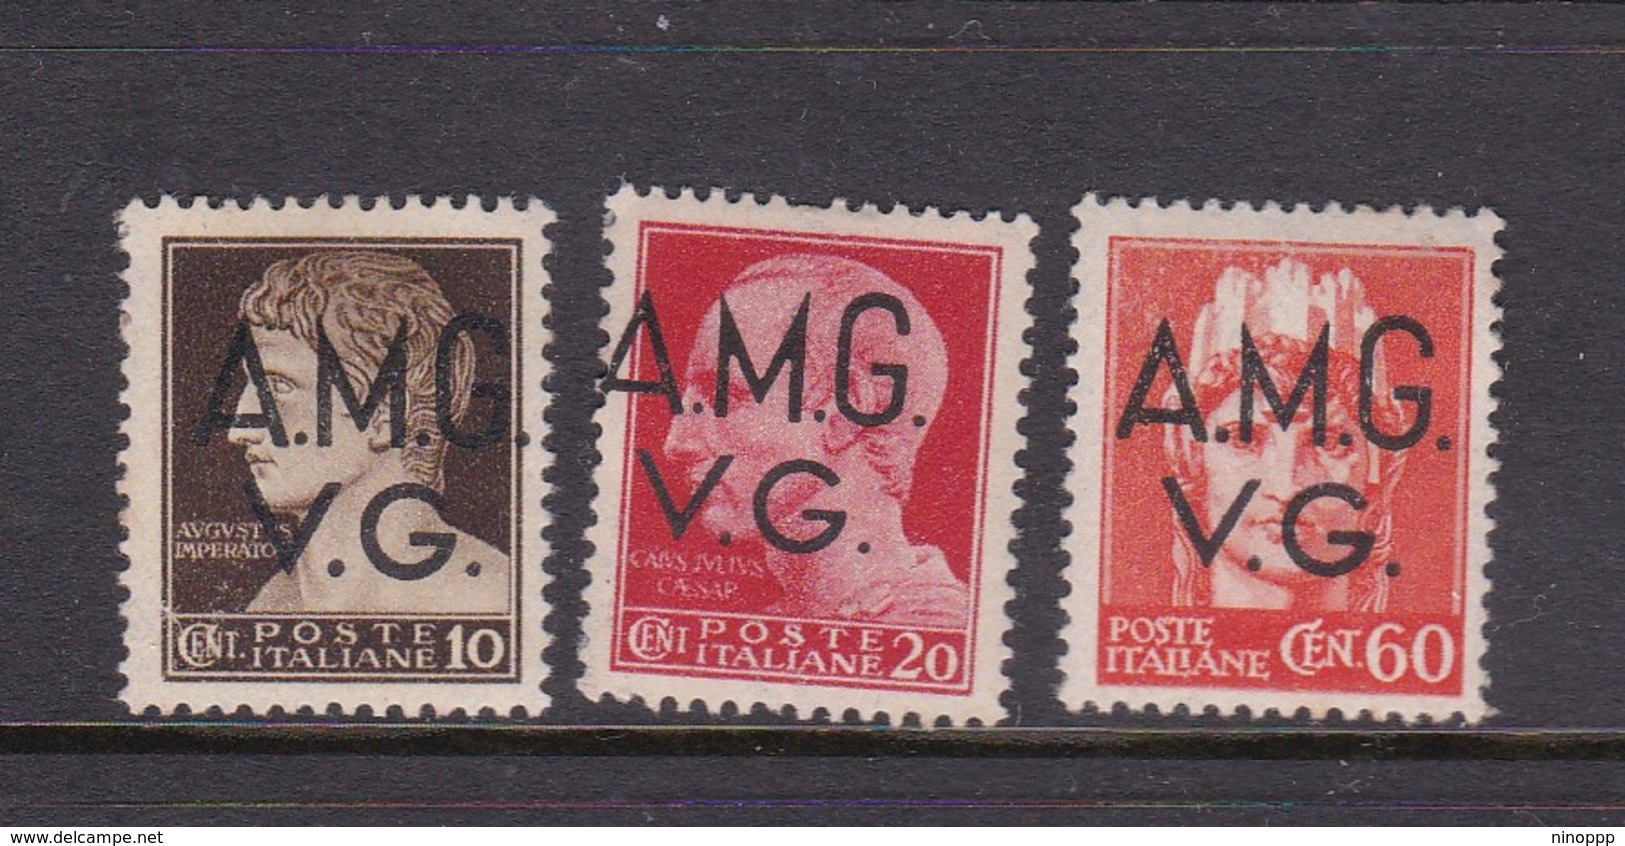 Venezia Giulia And Istria  A.M.G.V.G. 1945 S 8-10 1945 Definitives  Mint Hinged - Ongebruikt